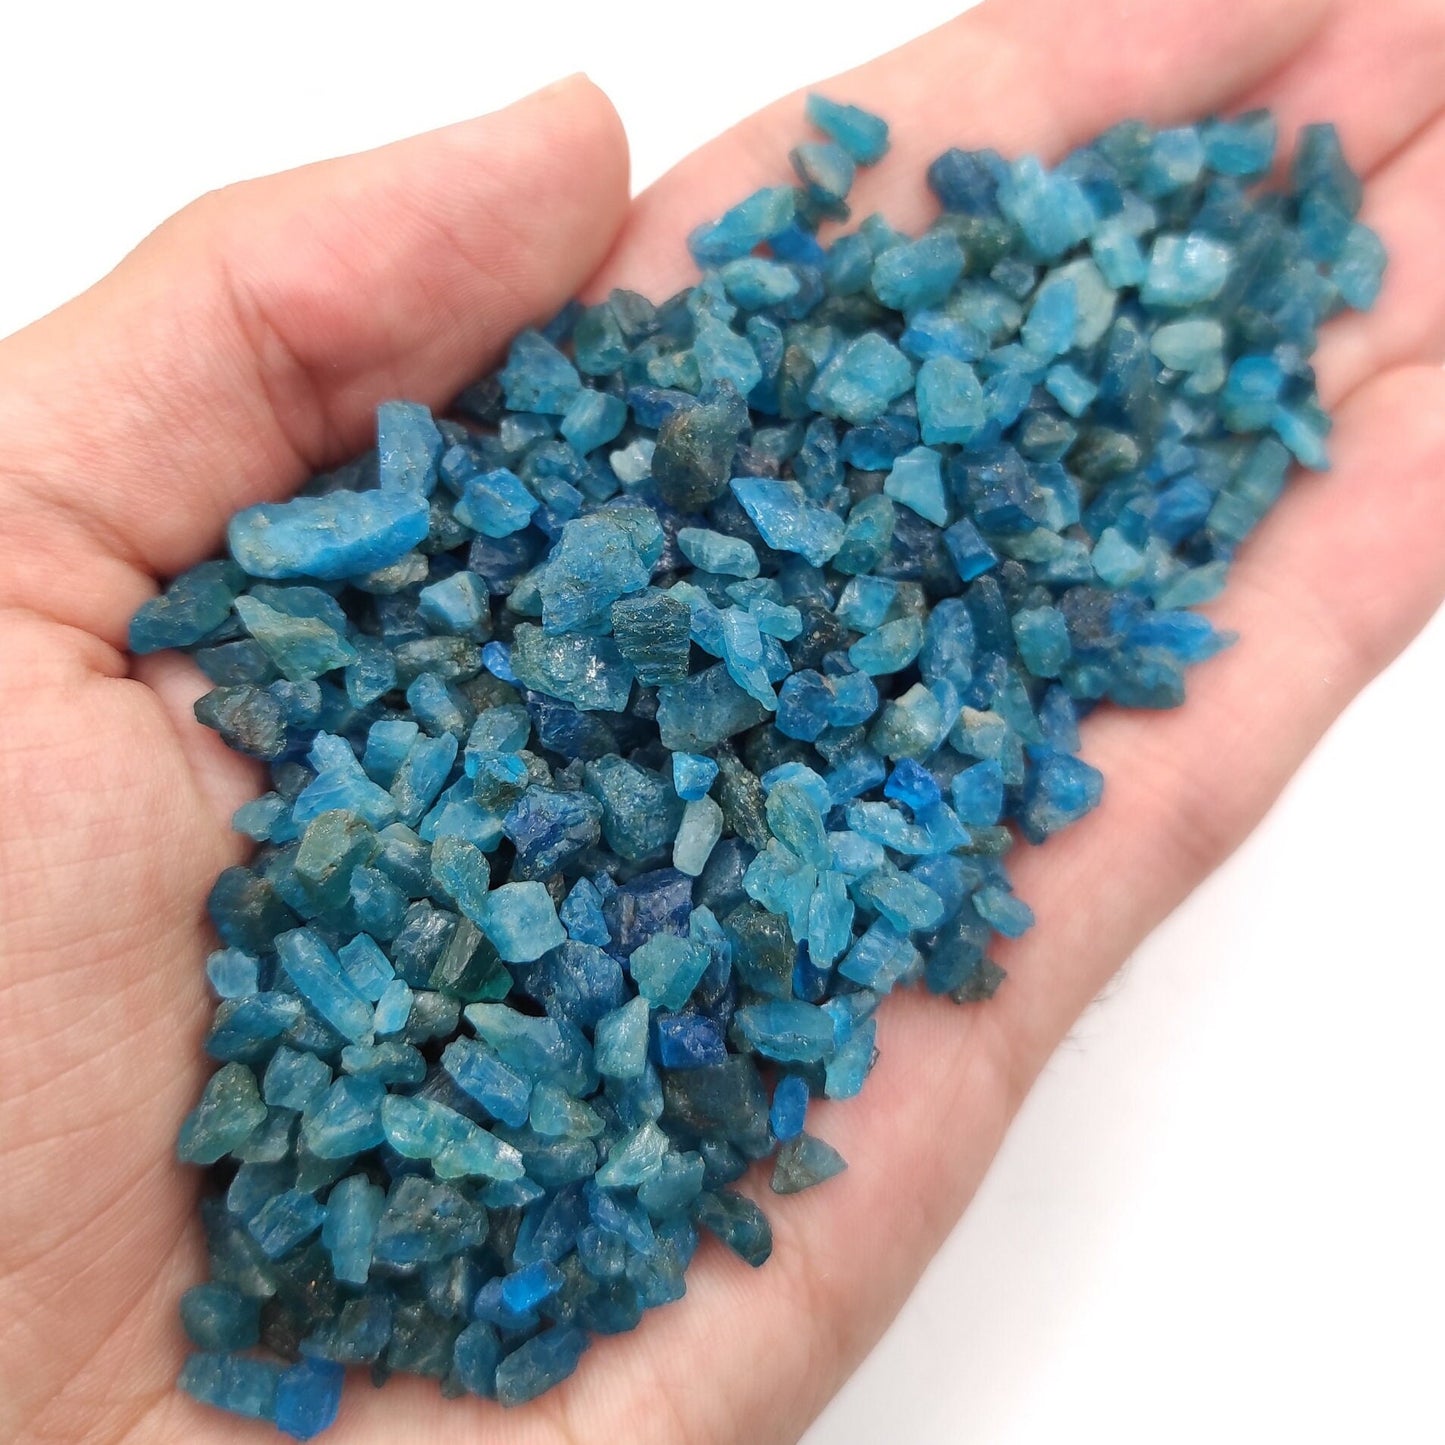 100g Blue Apatite Pieces - Mini Apatite Crystals from Madagascar - Raw Blue Apatite Stones - Rough Apatite Crystal Gravel